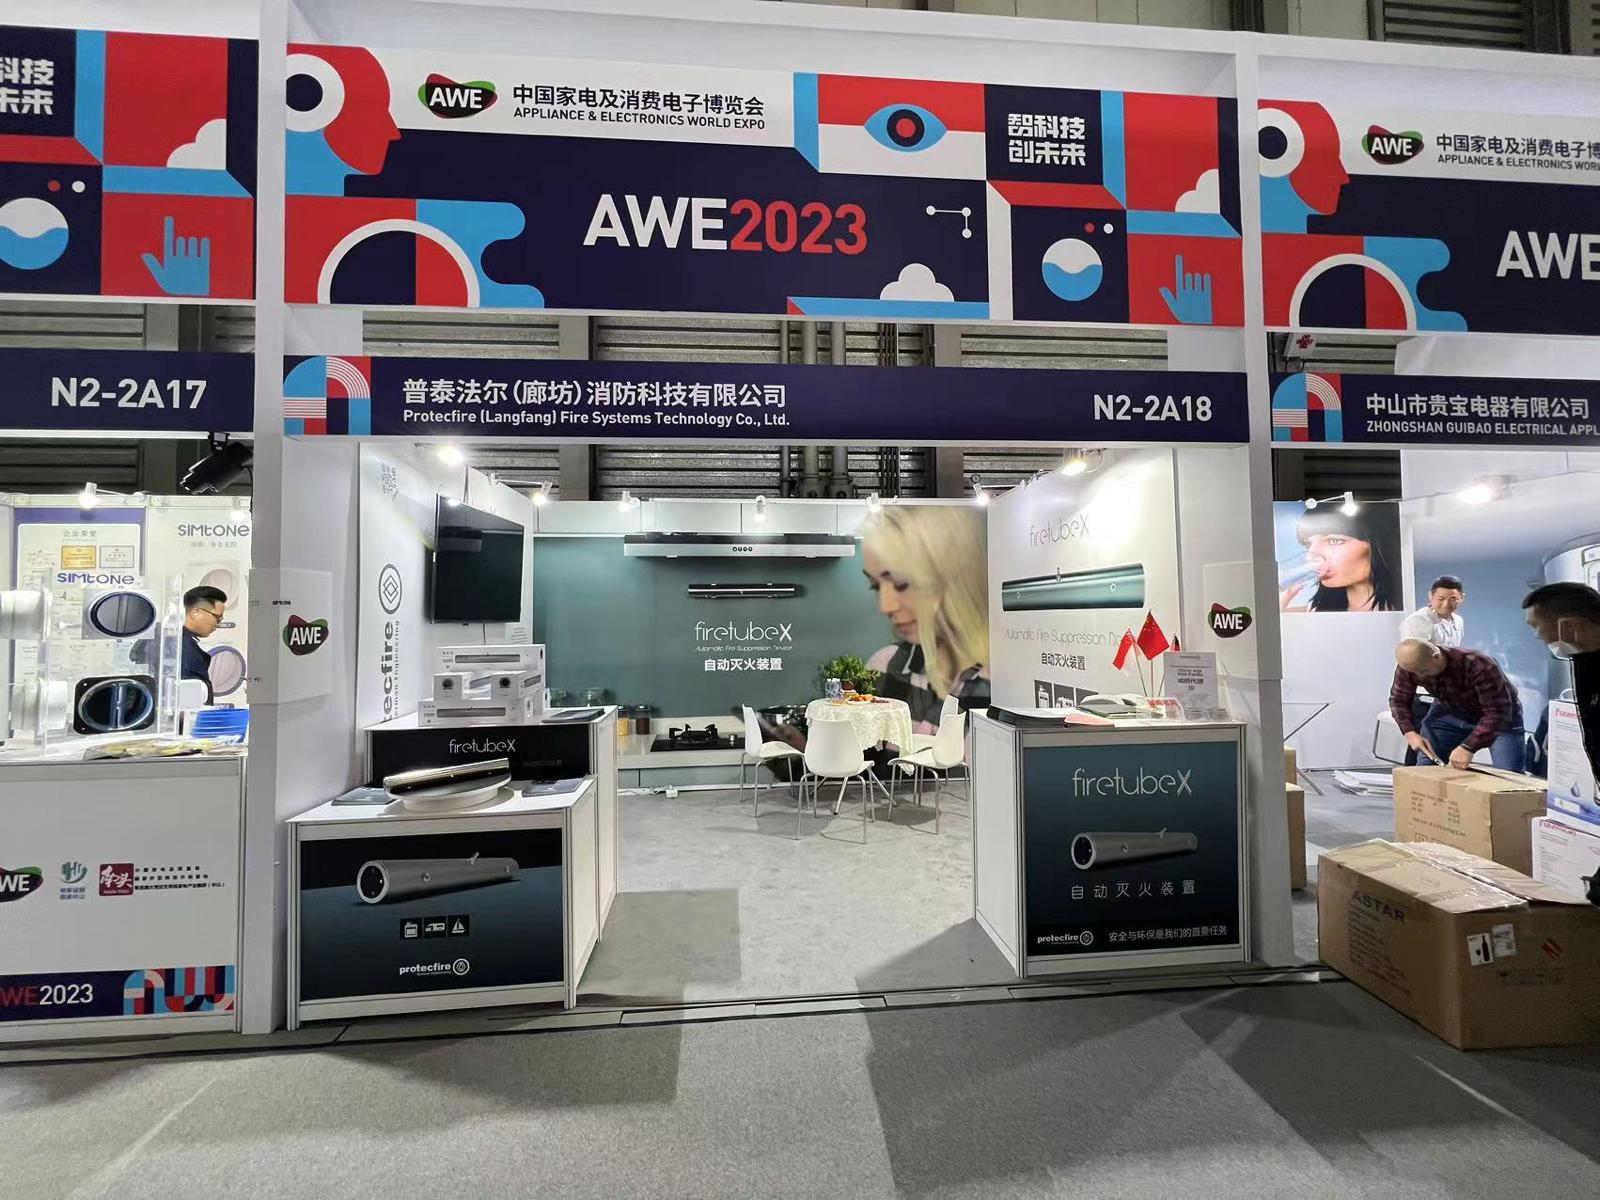 Appliance & Electronics World Expo-AWE2023